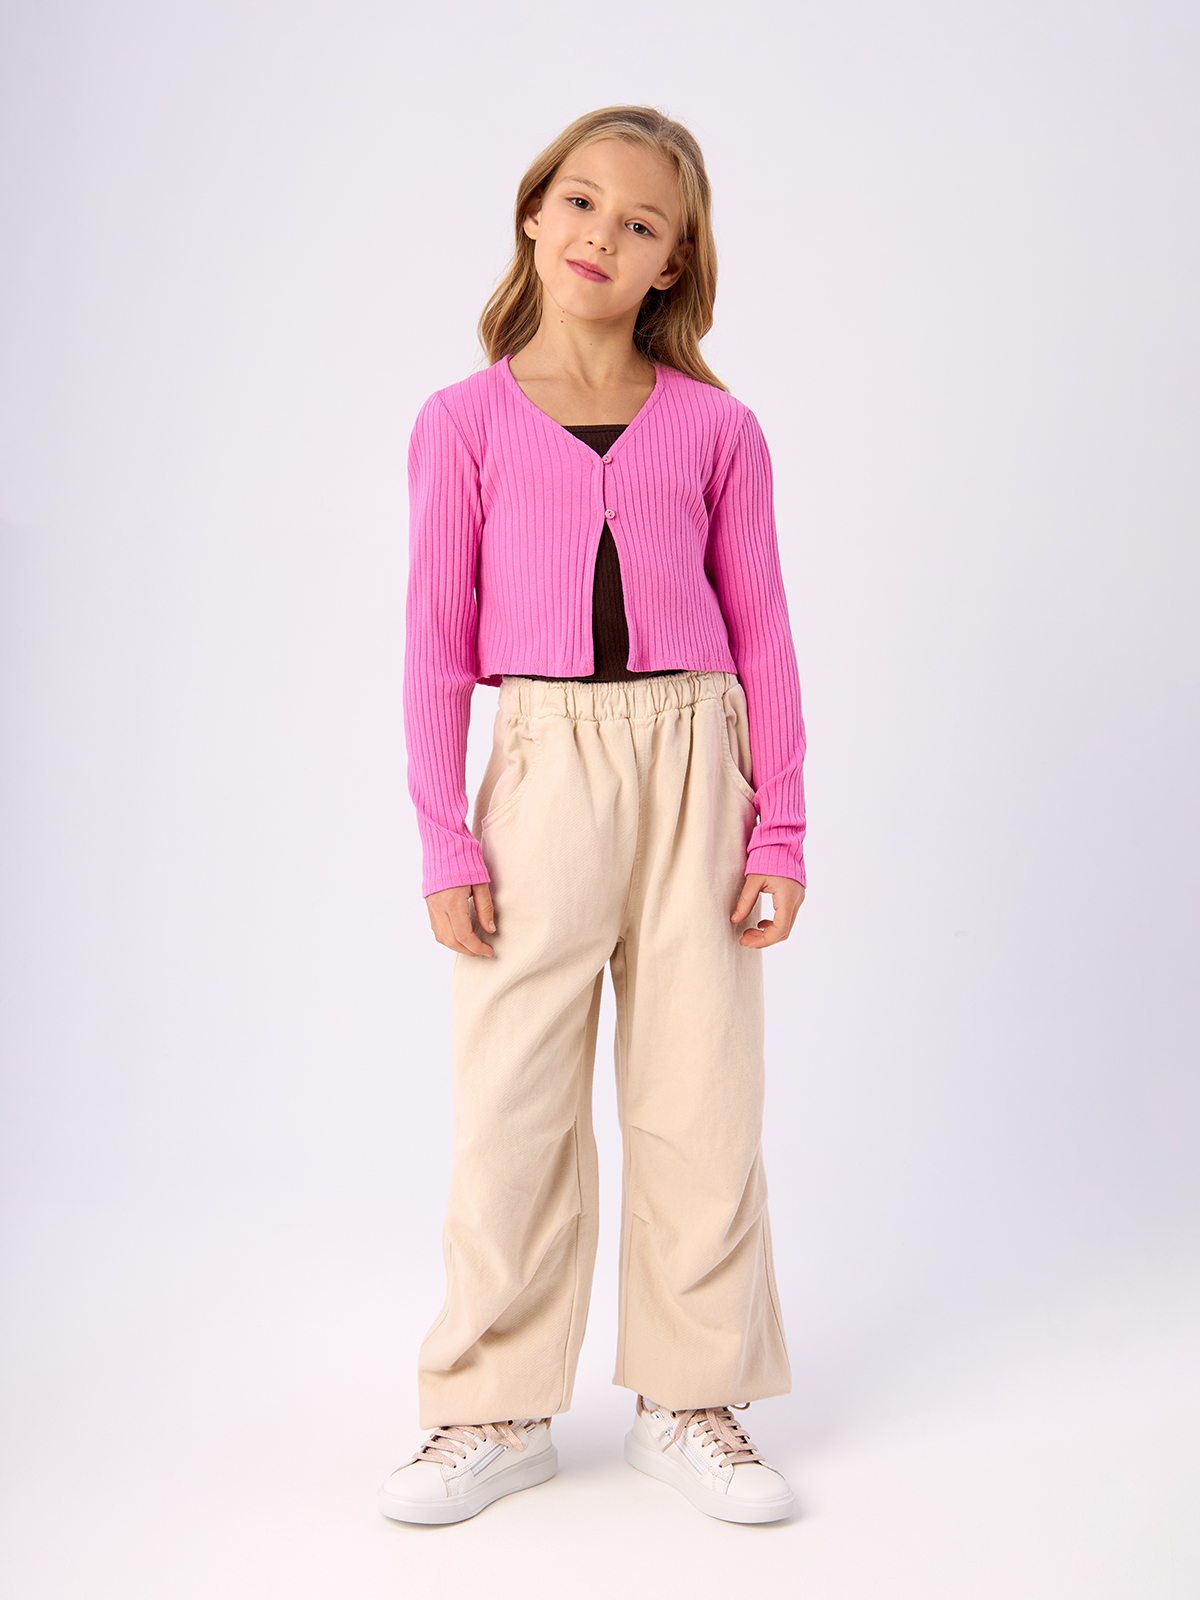 Кардиган H&M для девочек, розовый-001, размер 146/152, 1120731001 розовый кардиган gulliver 146